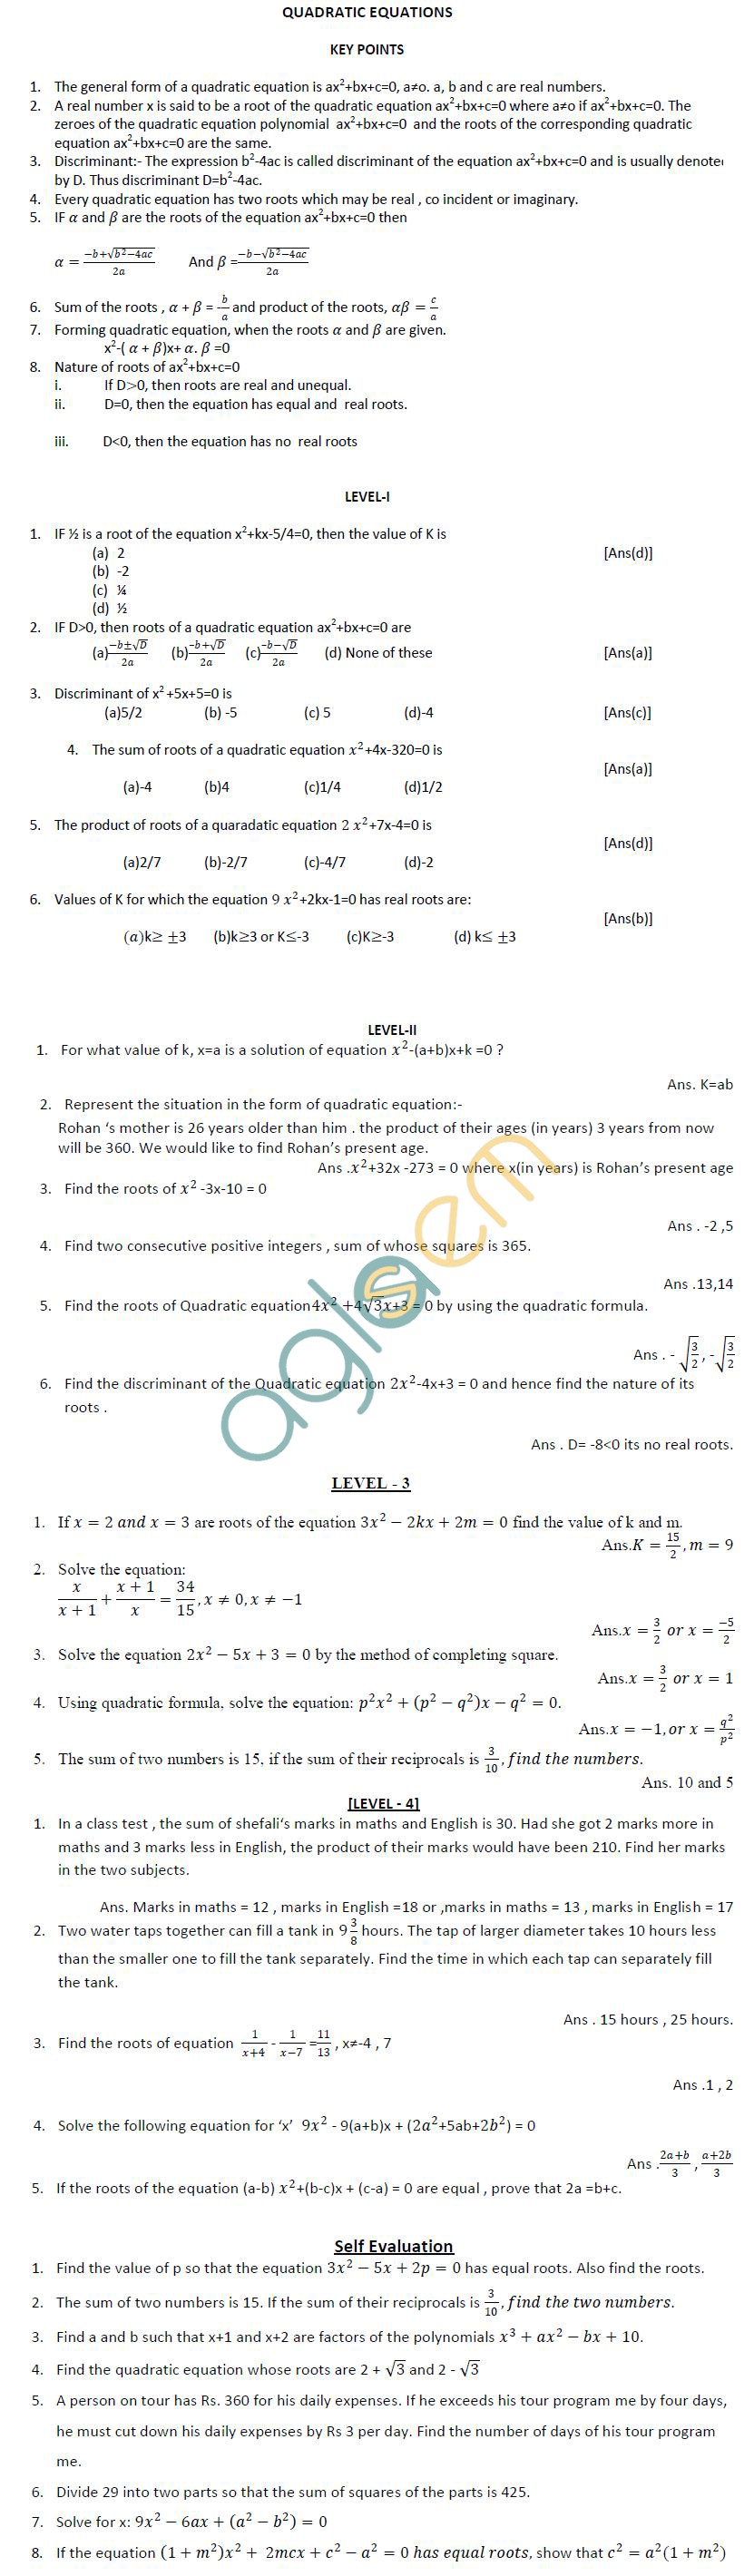 CBSE Class X: Maths - Quadratic Equation